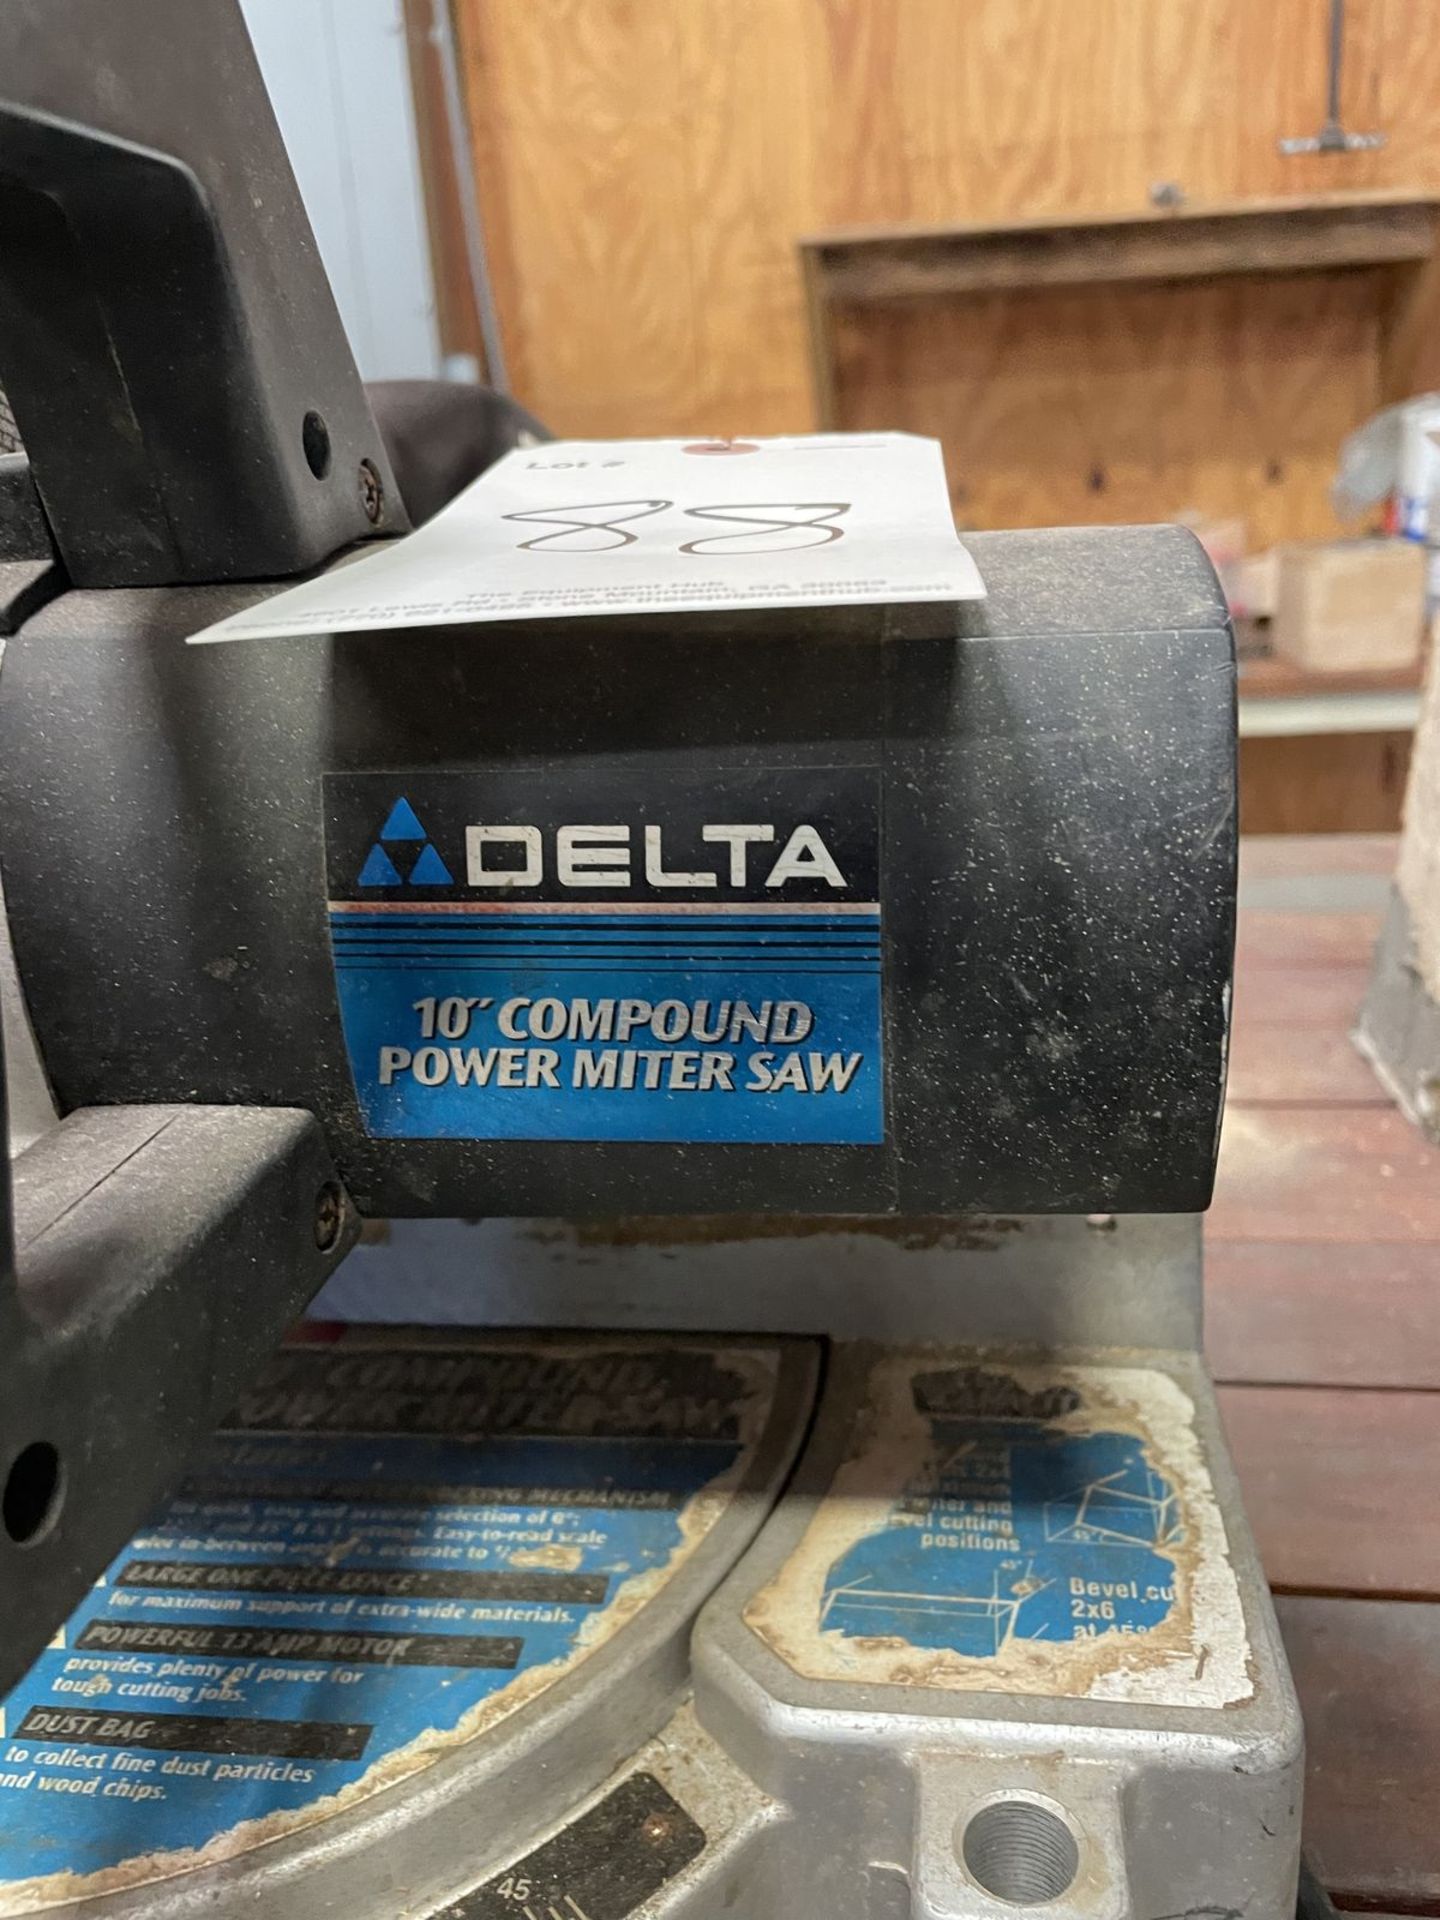 Delta 10" Compound Power Miter Saw - Image 2 of 2